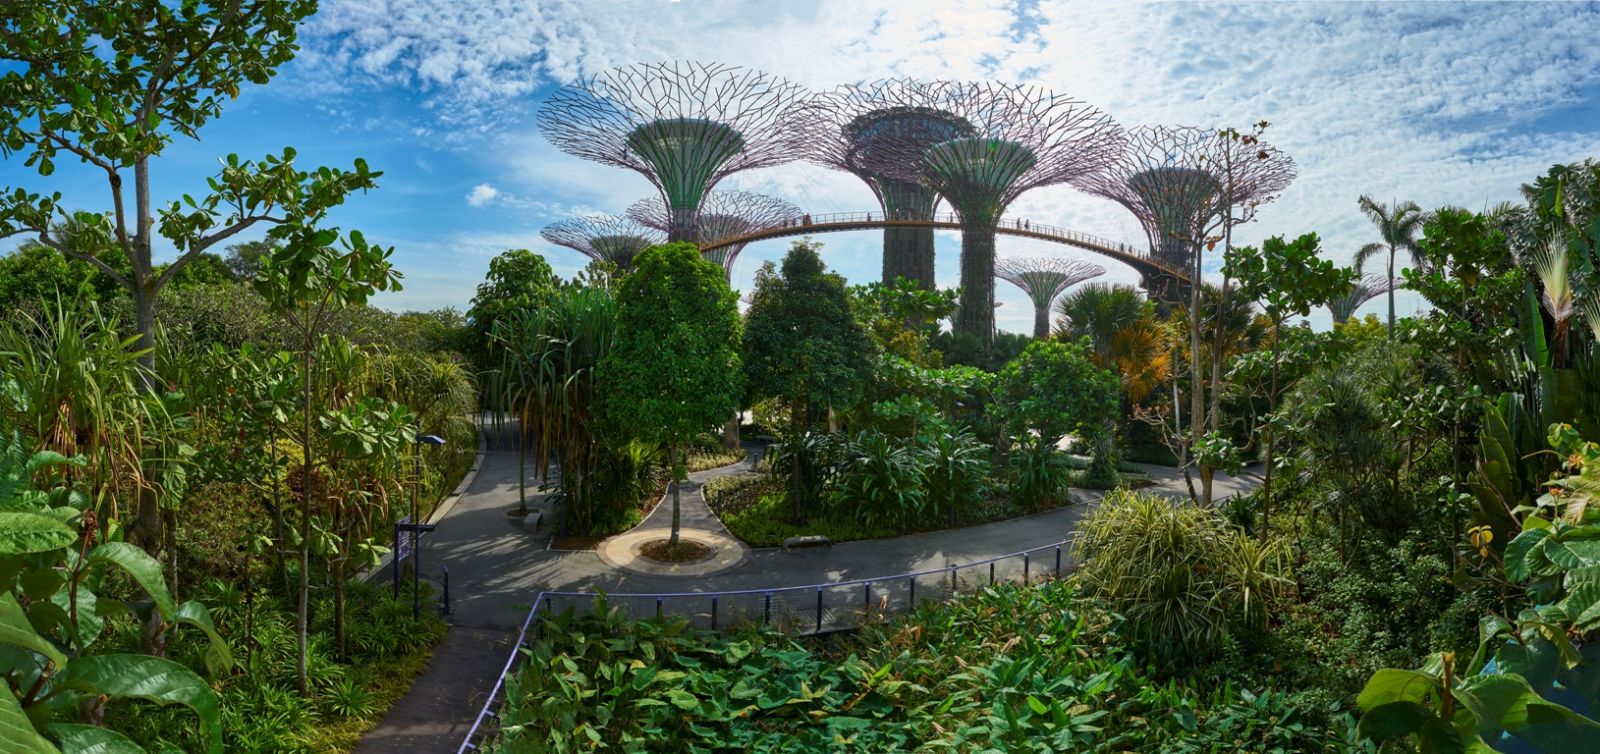 Сады у залива в Сингапуре — Gardens by the Bay